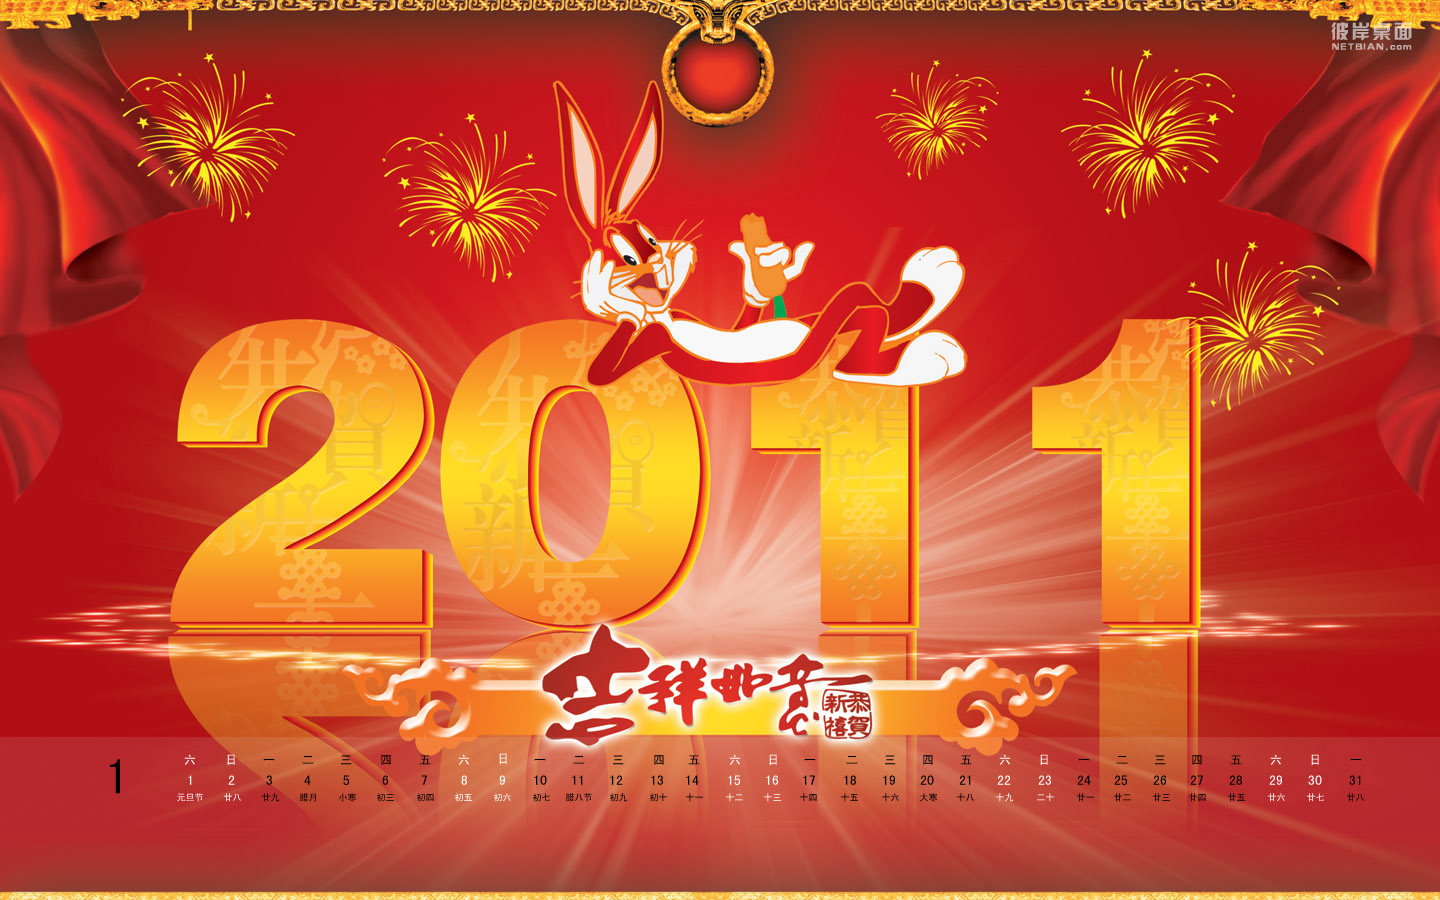 New Year's Day Calendar 2011 New Year Calendar Wallpaper